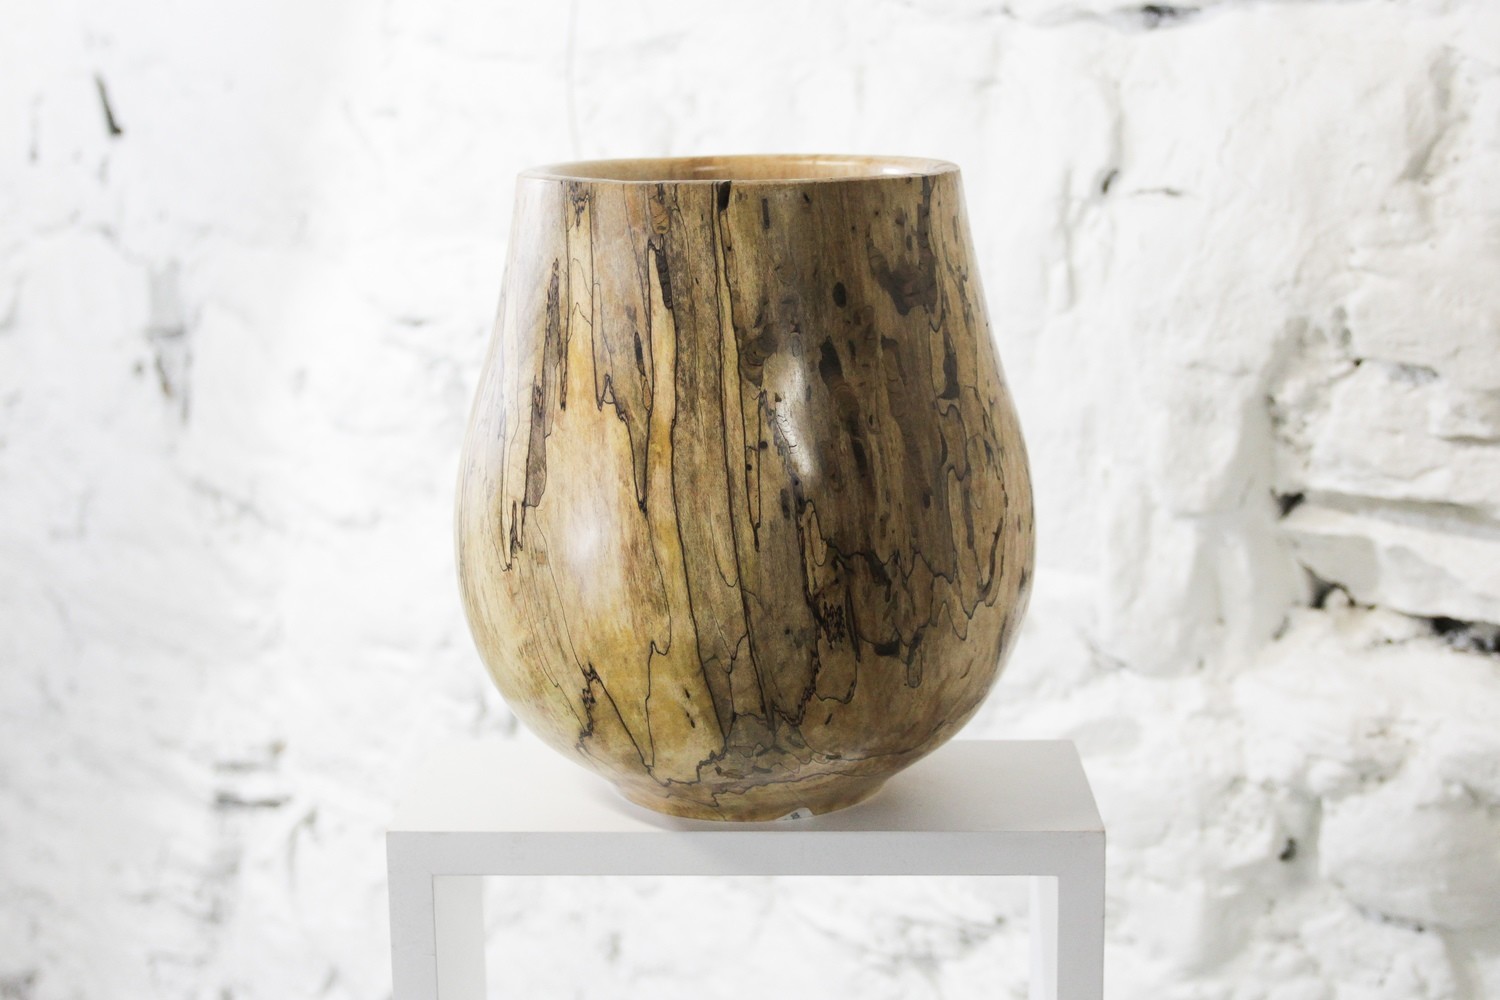 Spalted maple vase, 8.5x7.5